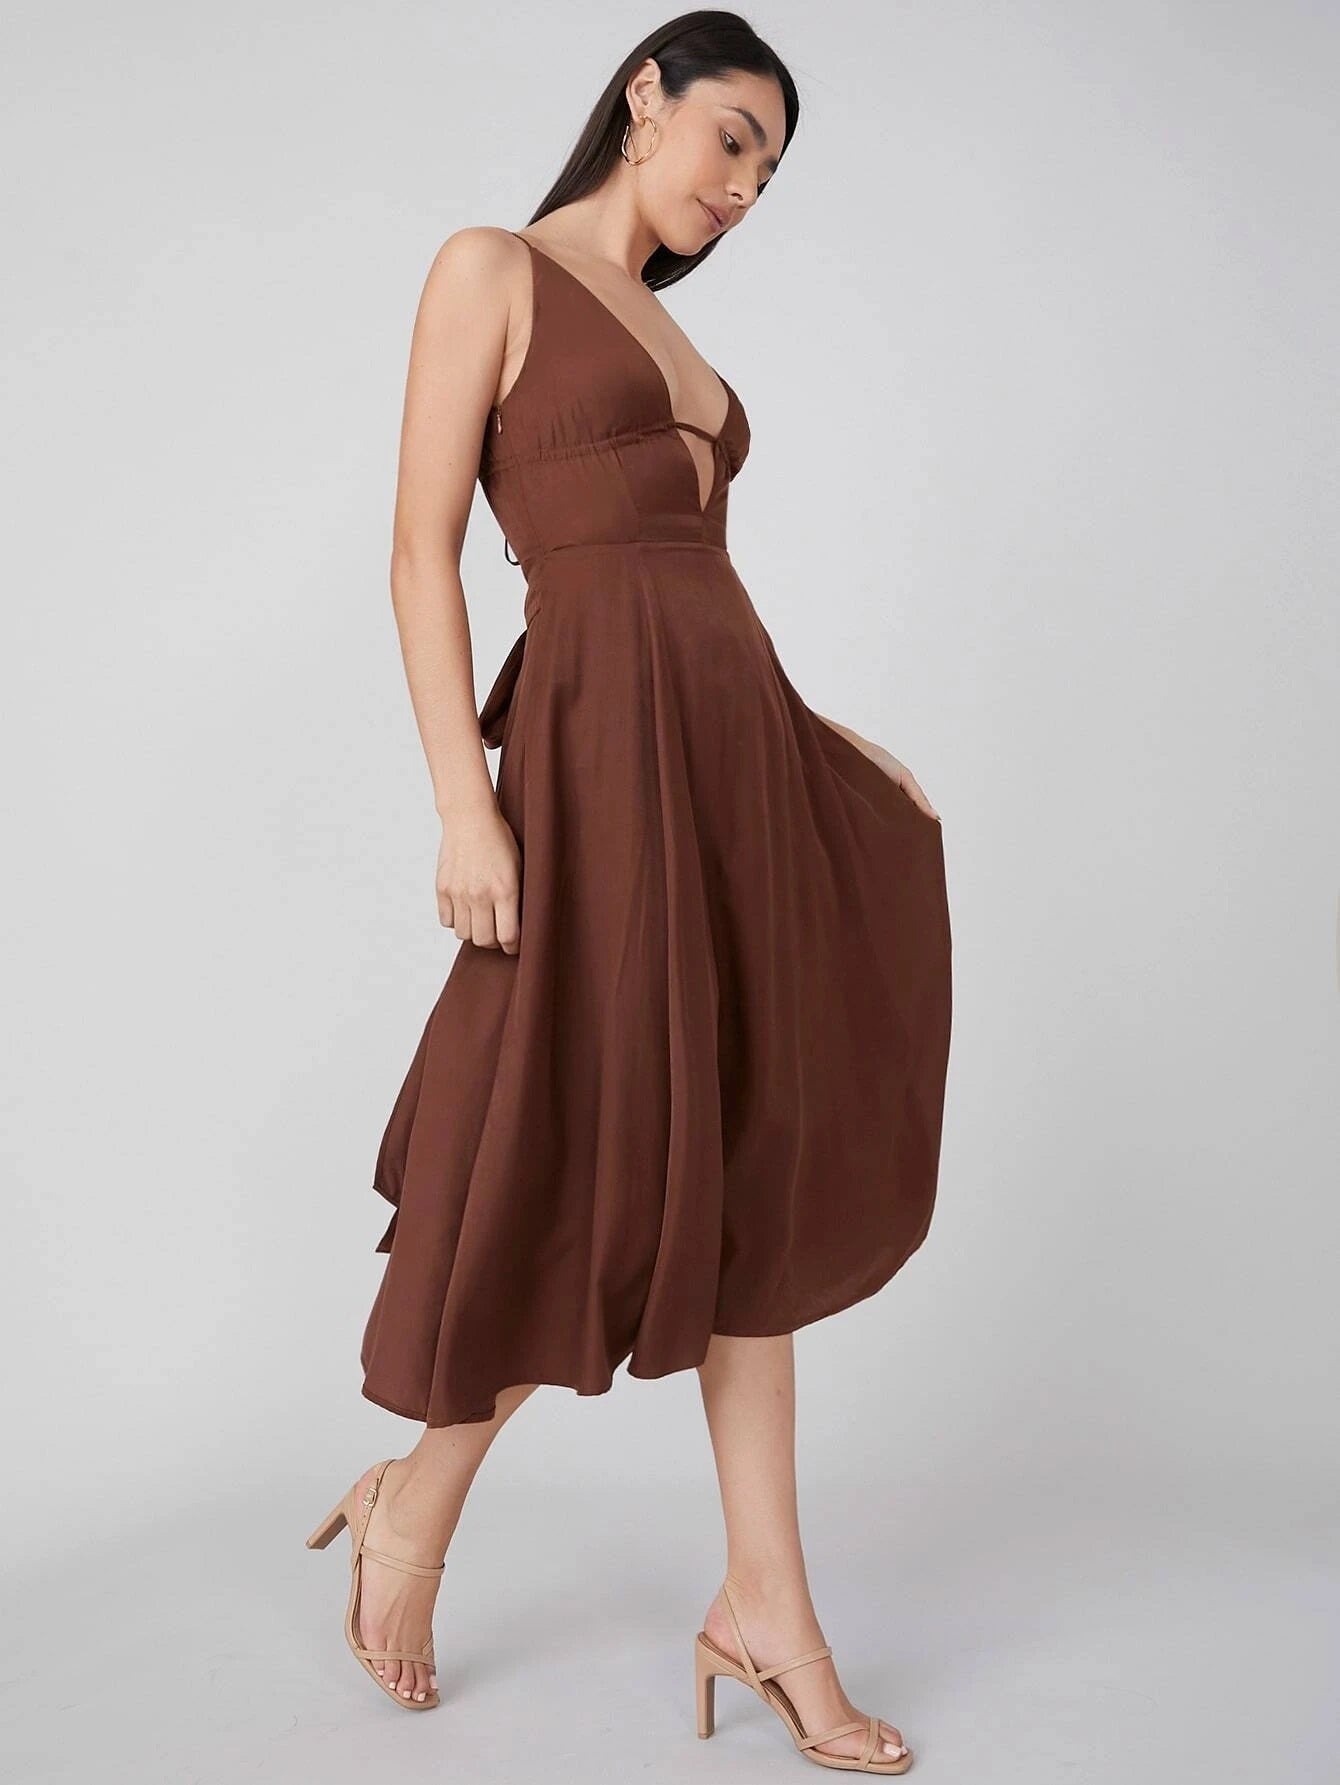 CM-ES106486 Women Elegant Seoul Style Viscose Sleeveless Plunging Neck Slip Dress - Coffee Brown